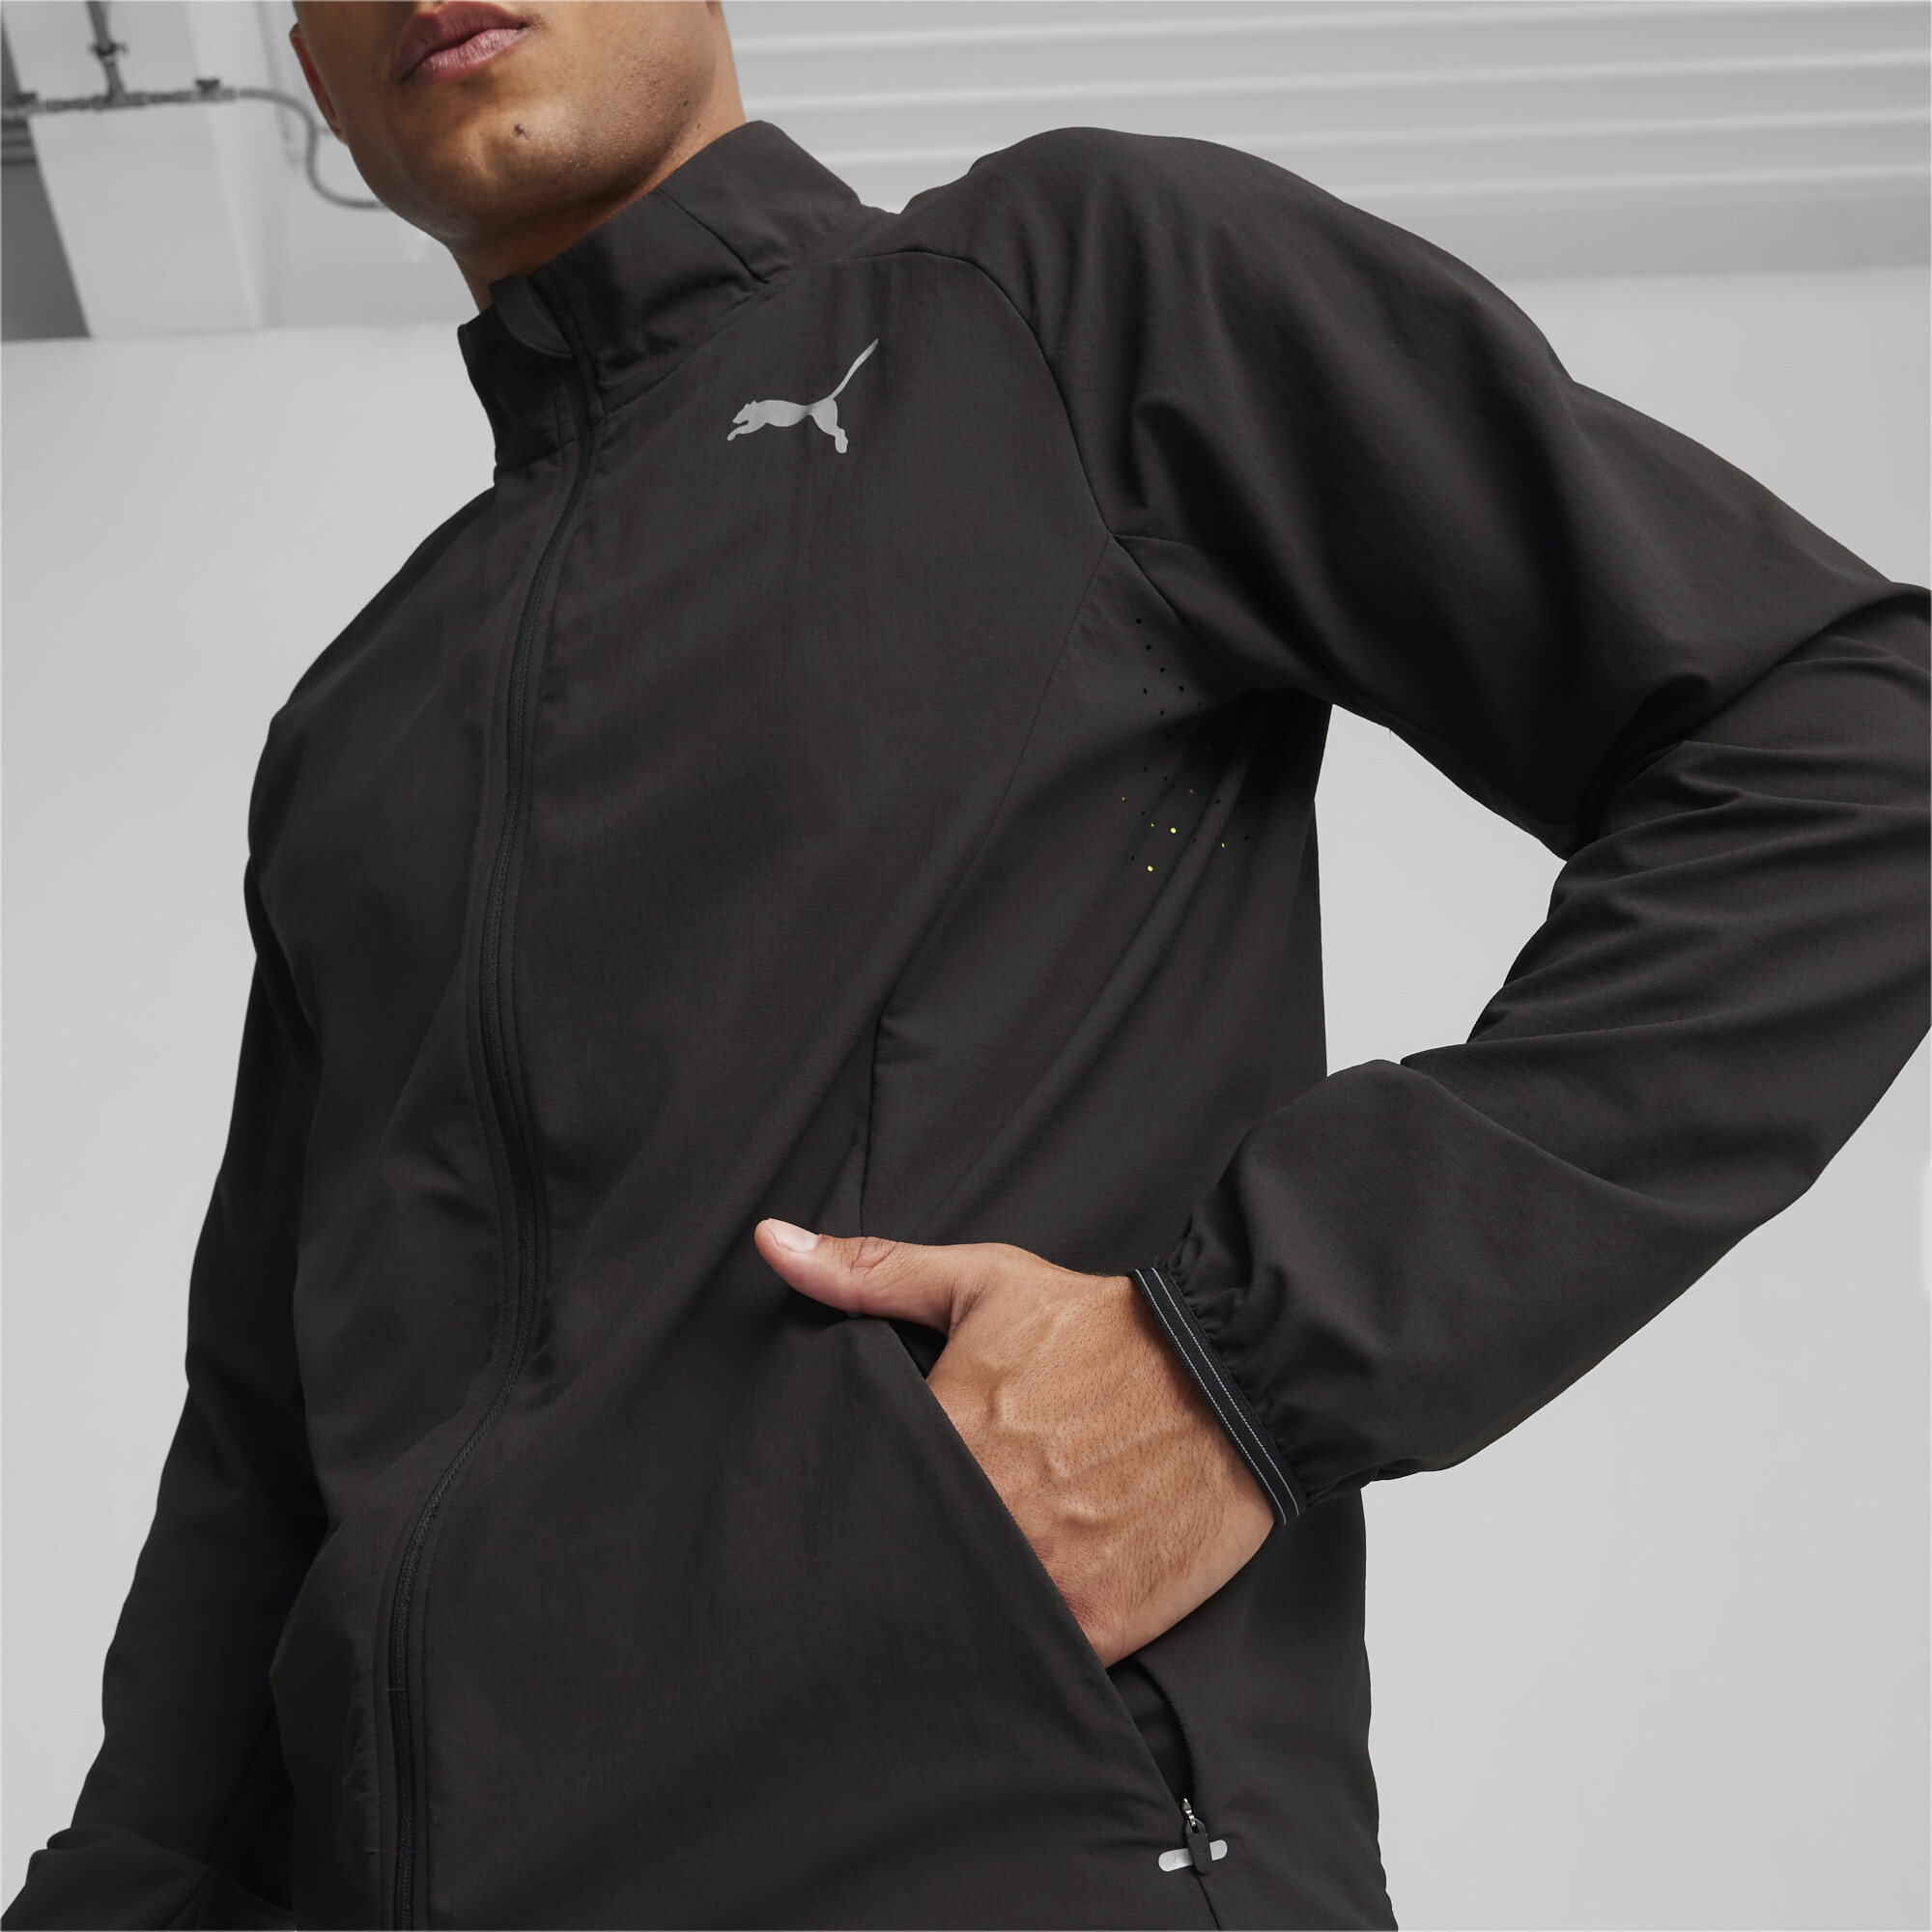 Men's PUMA RUN Elite Jacket In Black, Size XL